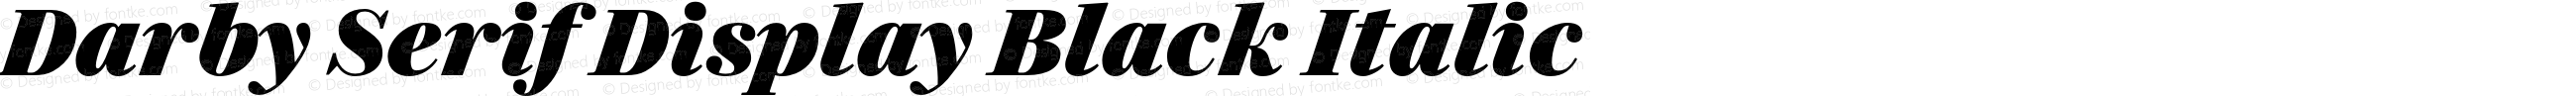 Darby Serif Display Black Italic